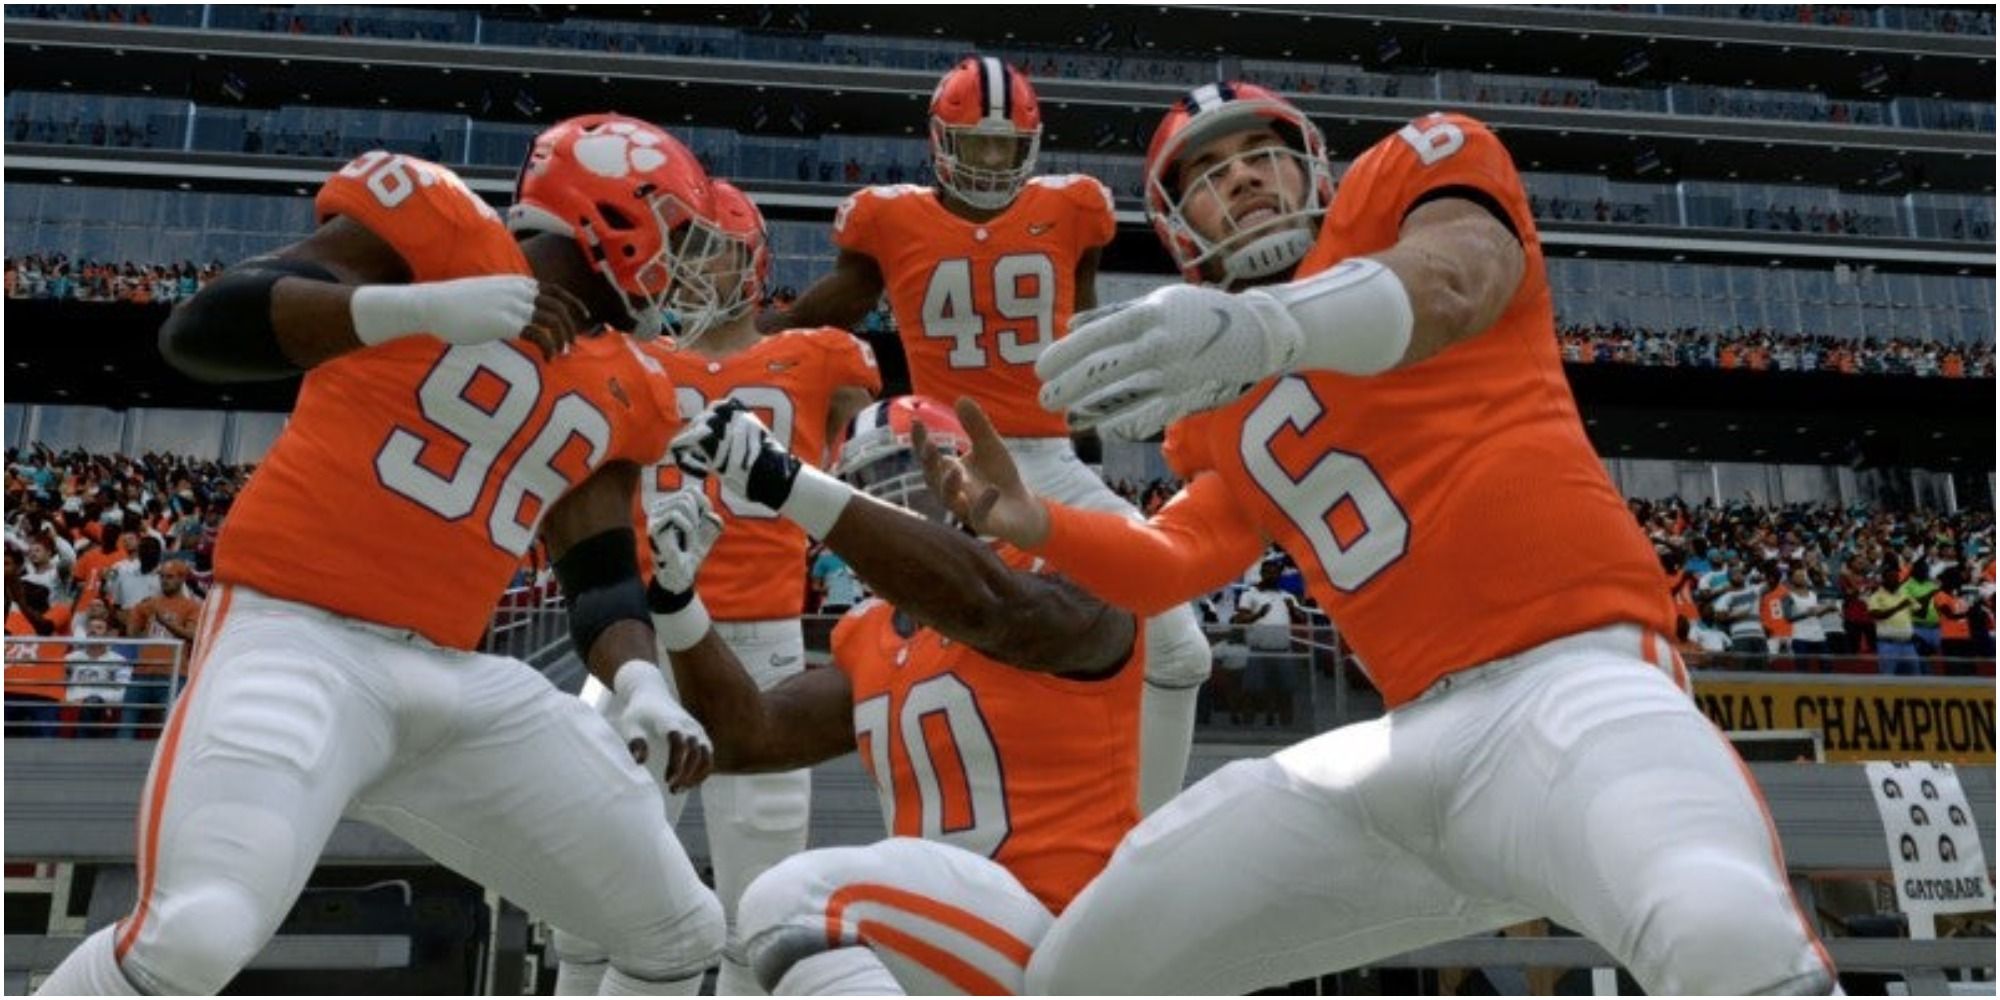 Madden NFL 21 Clemson's Defense Celebrating A Big Play